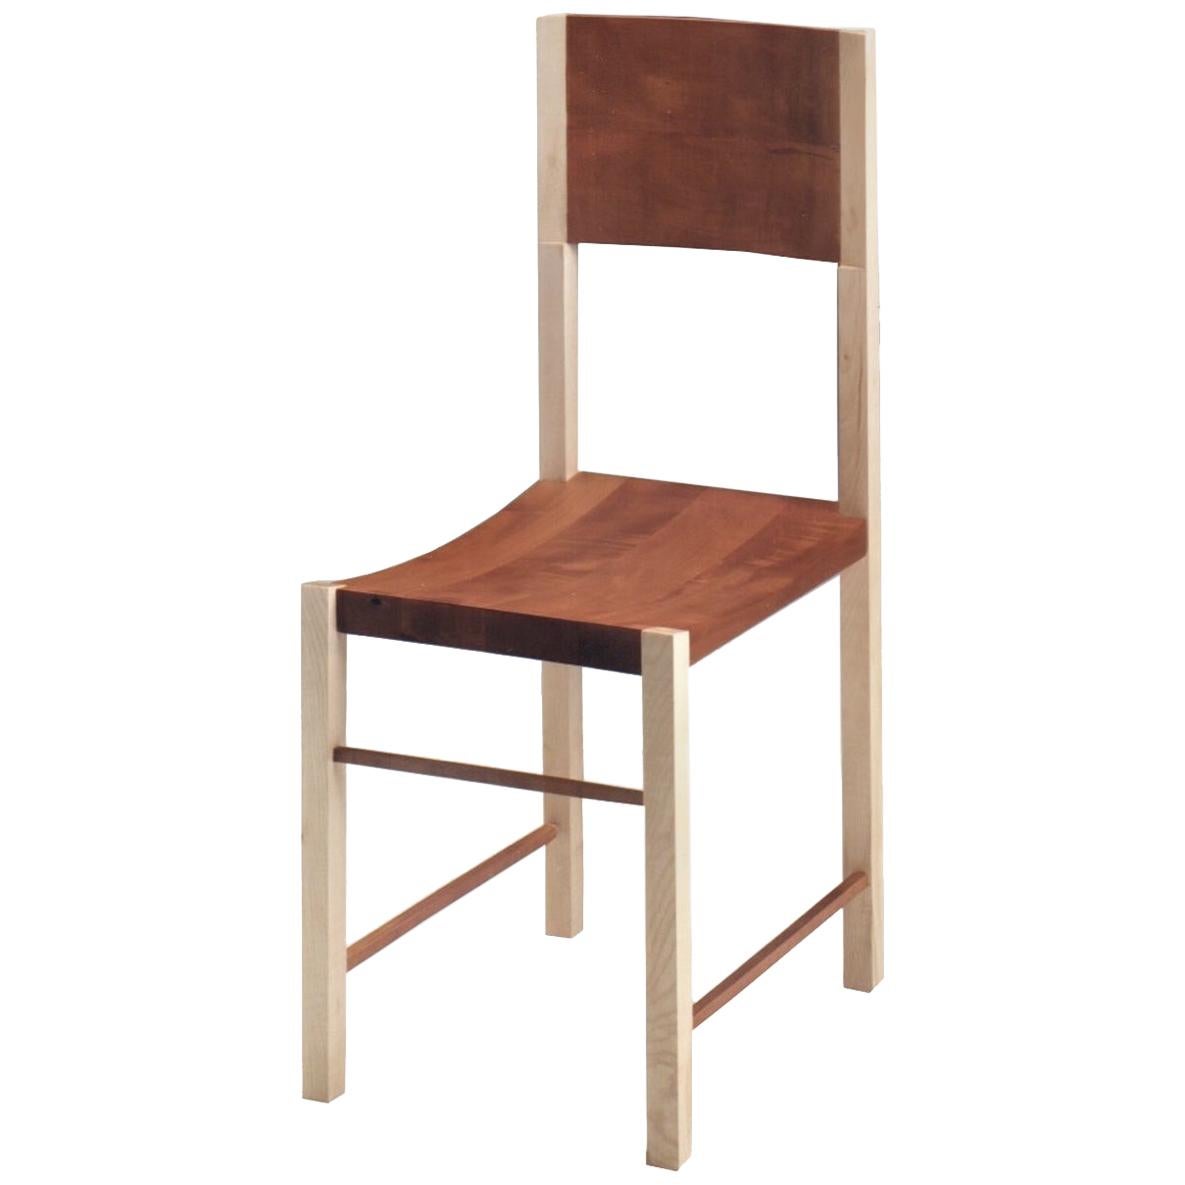 Cavea Chair For Sale